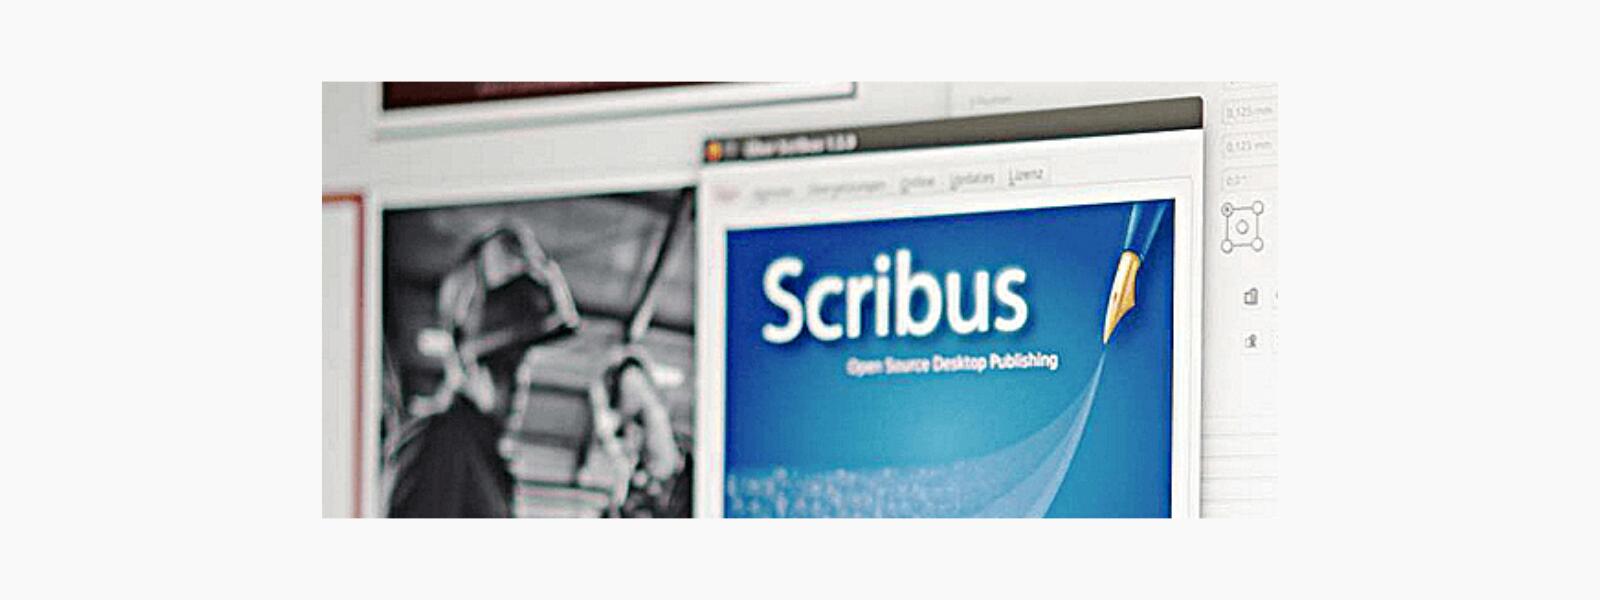 Nova versión de Scribus, aplicación para maquetación